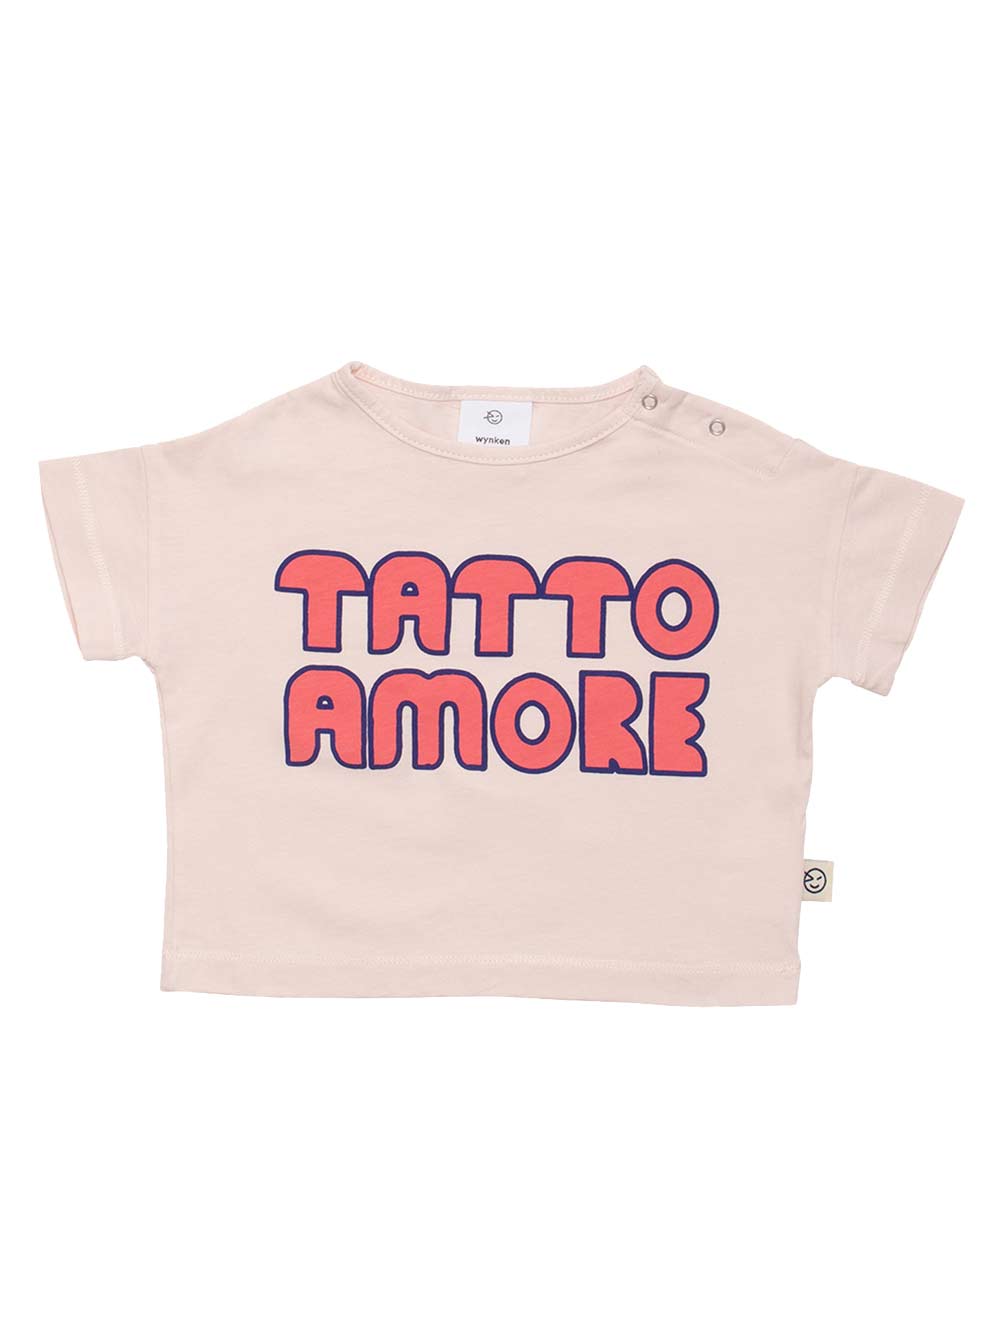 Baby Tatto Amore Tee